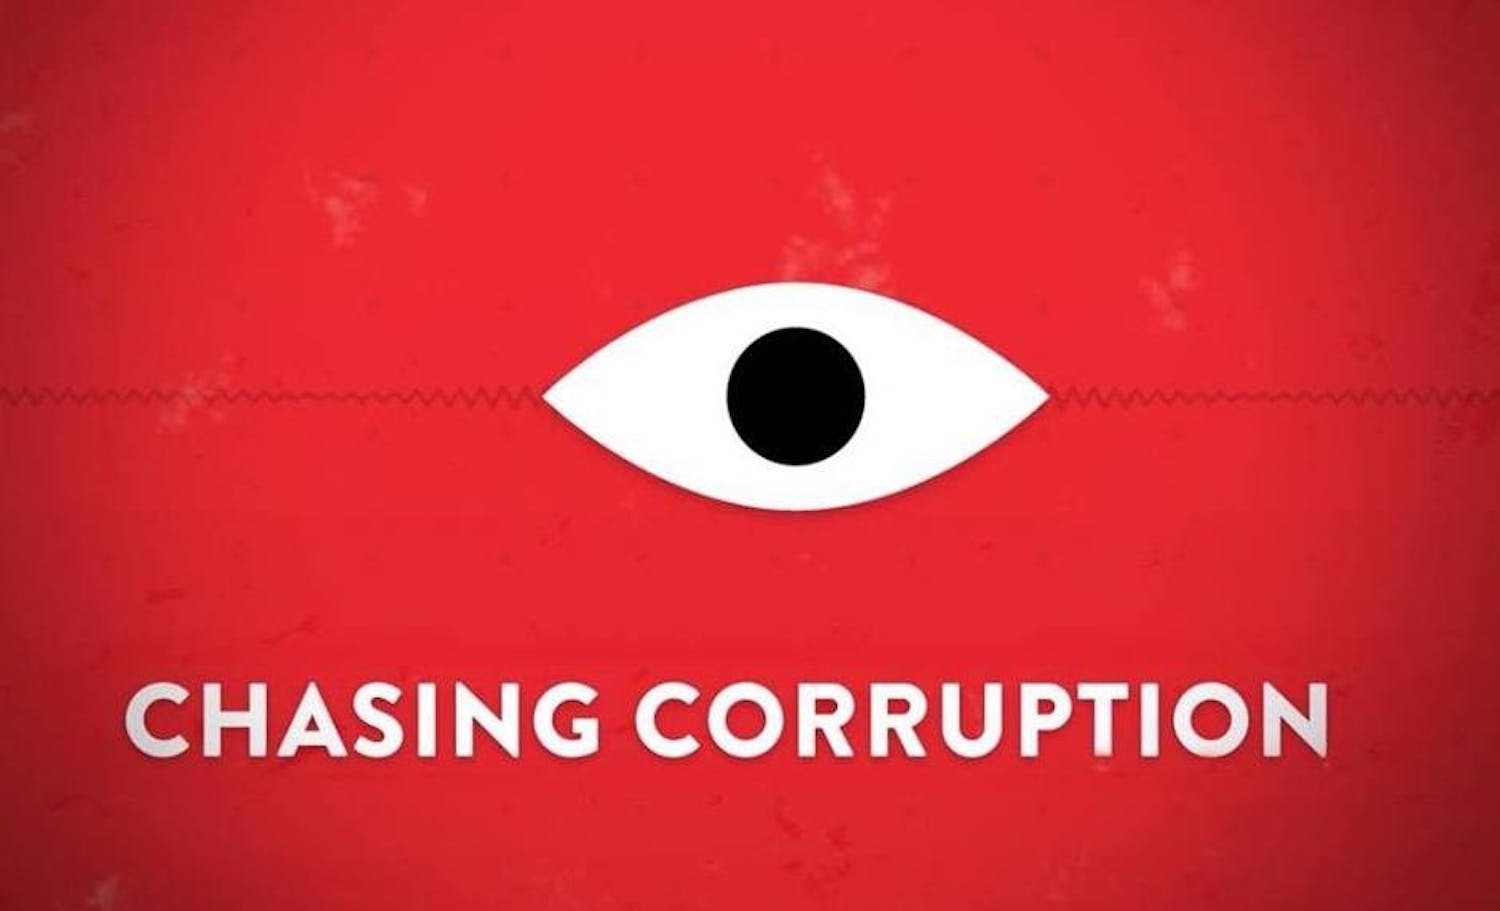 Chasing corruption.jpg